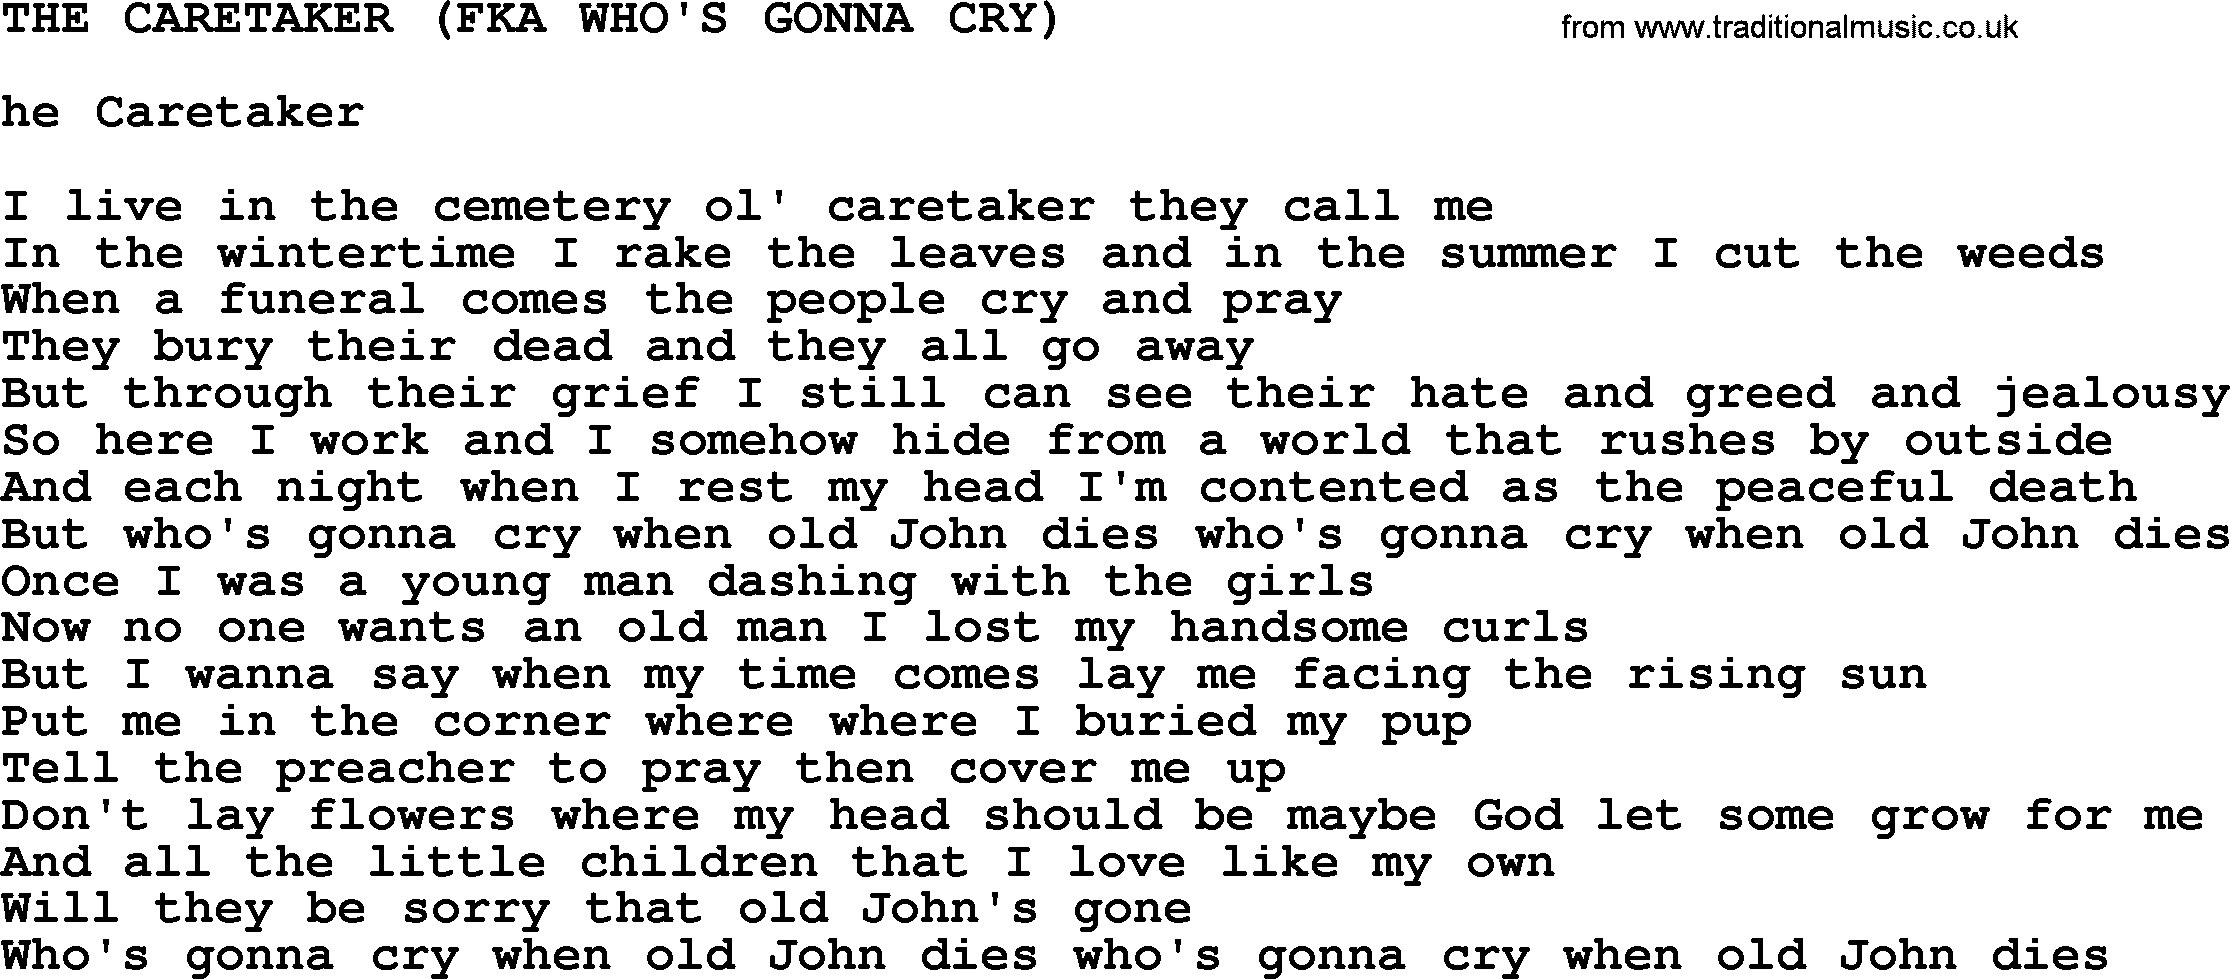 Johnny Cash song The Caretaker(Who's Gonna Cry).txt lyrics